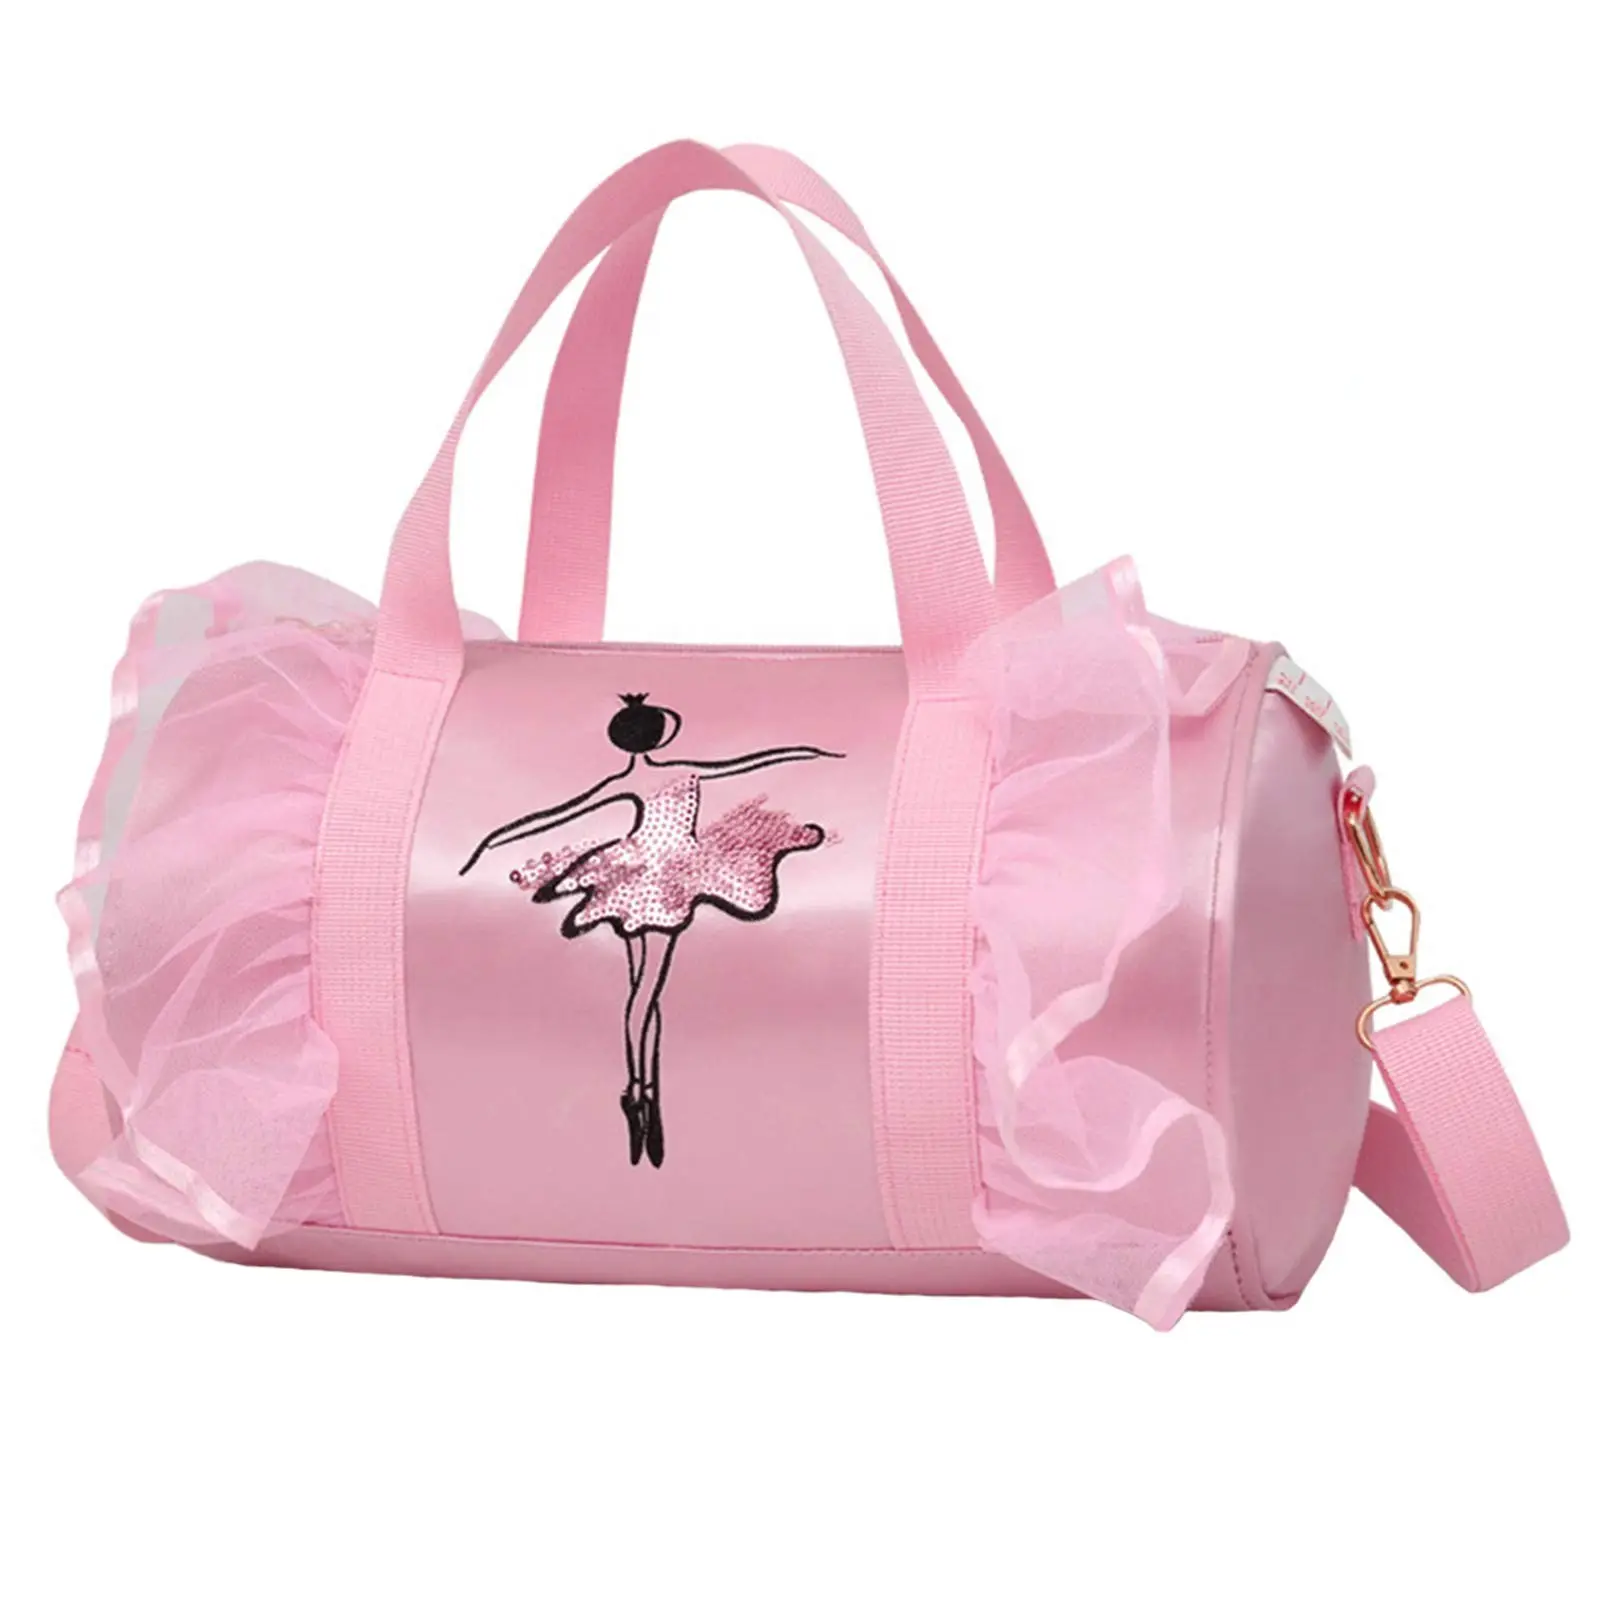 Cute Pink Ballet Dance Bag Tutu Dress Bag Sports Dance Girls Roller Package Backpack Clothes Shoes Dress Handbag